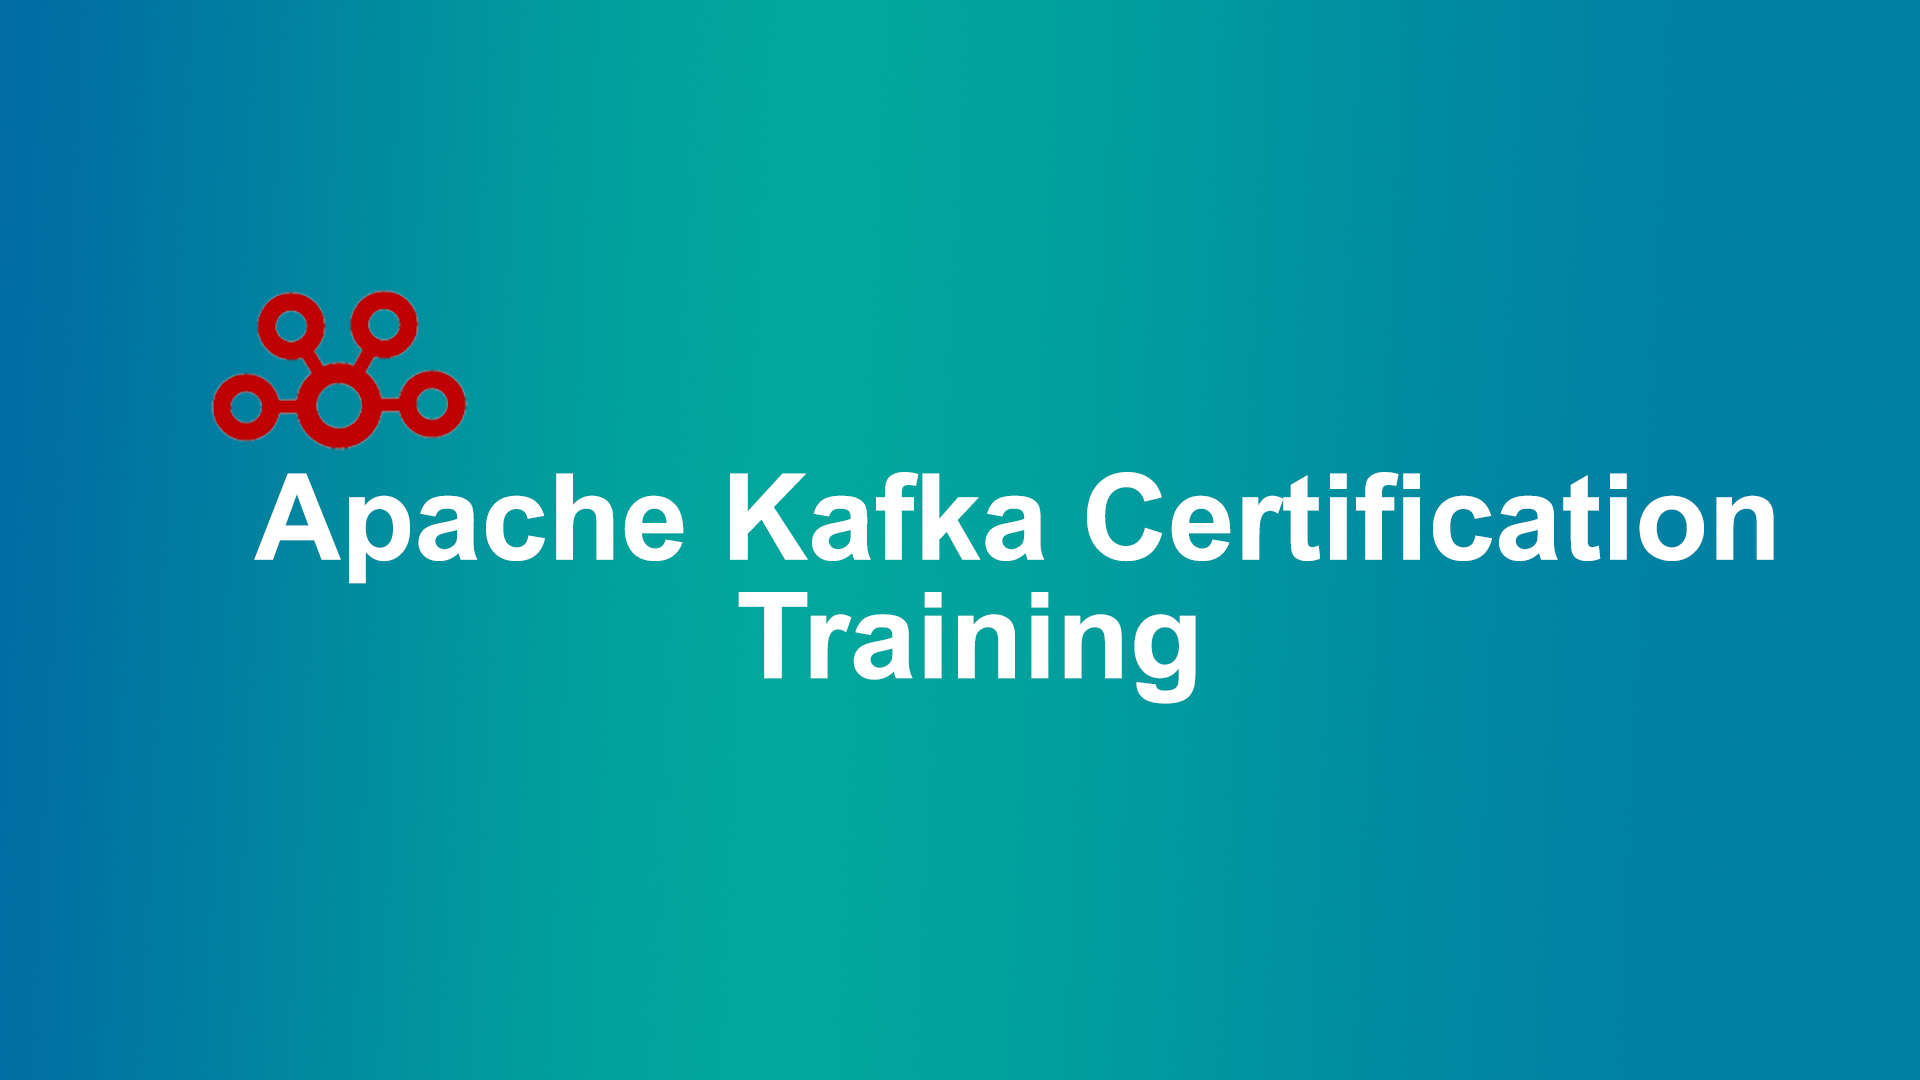 Apache Kafka Certification Training